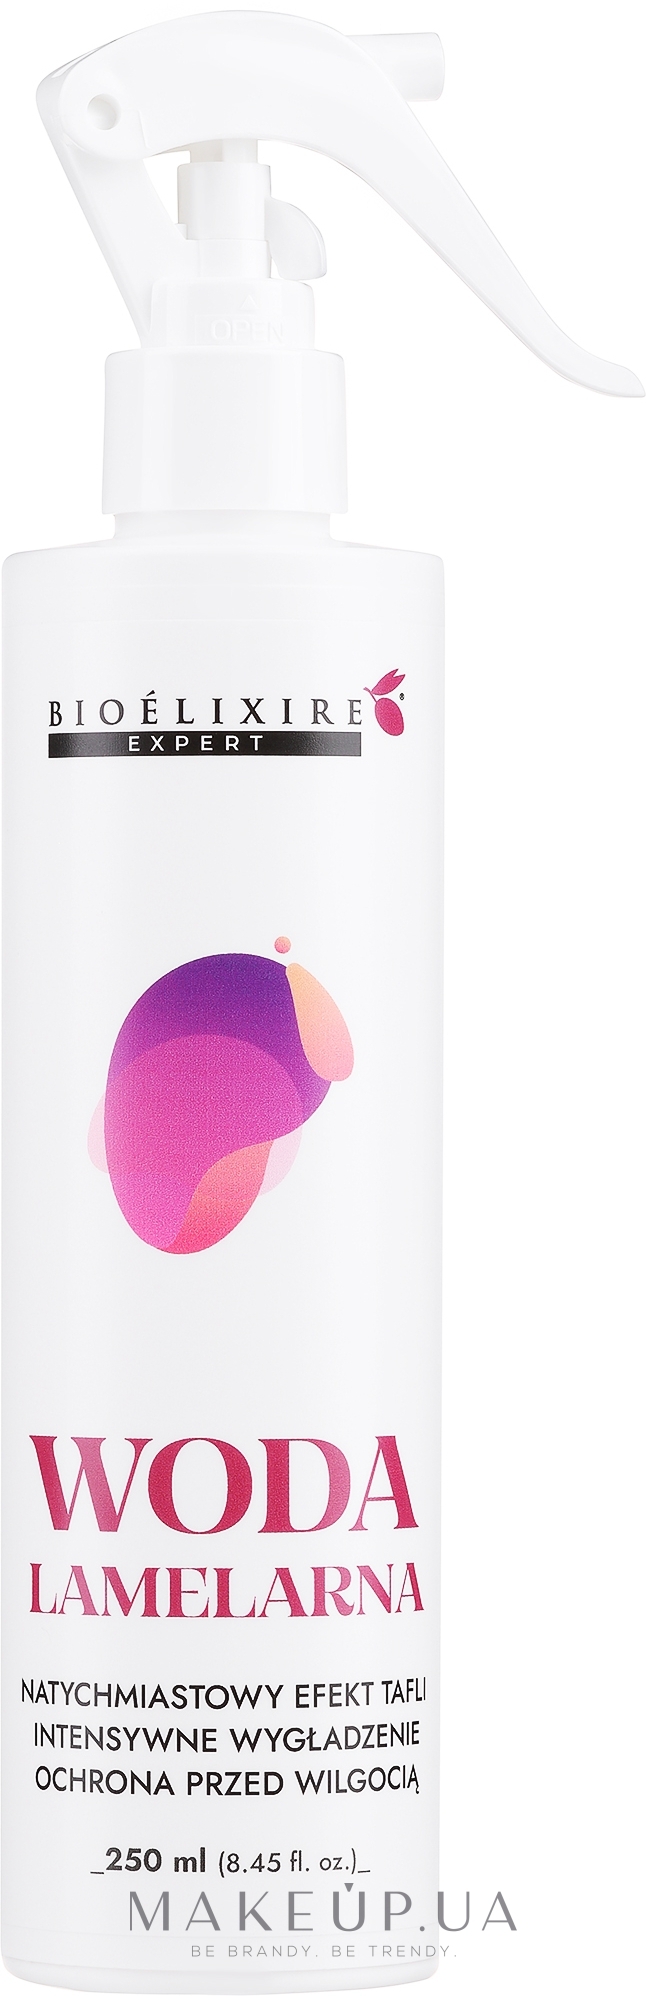 Ламелярна вода для волосся - Bioelixsire Expert Lamellar Water — фото 250ml